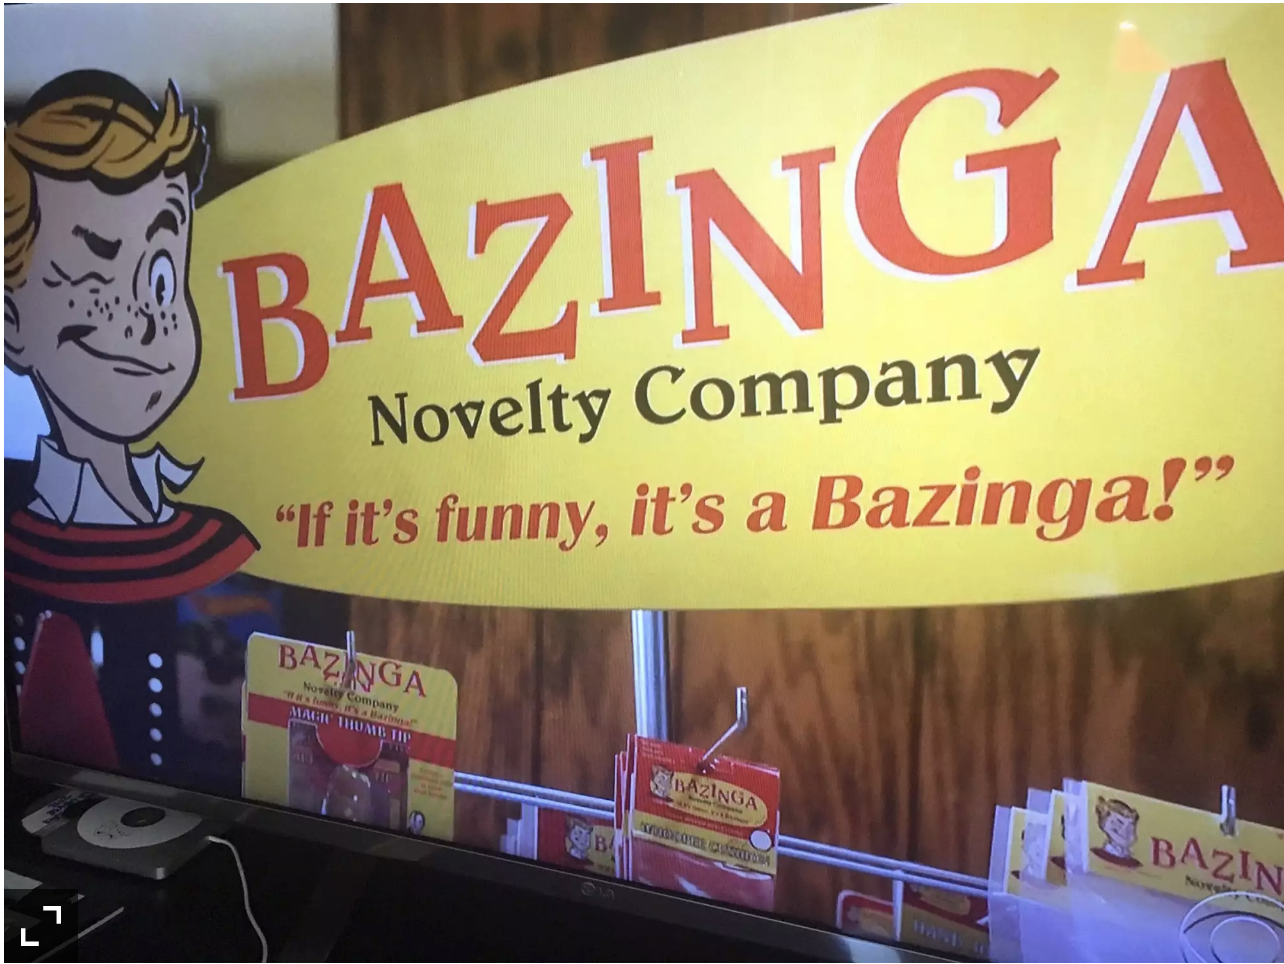 Bazinga toy company from Young Sheldon